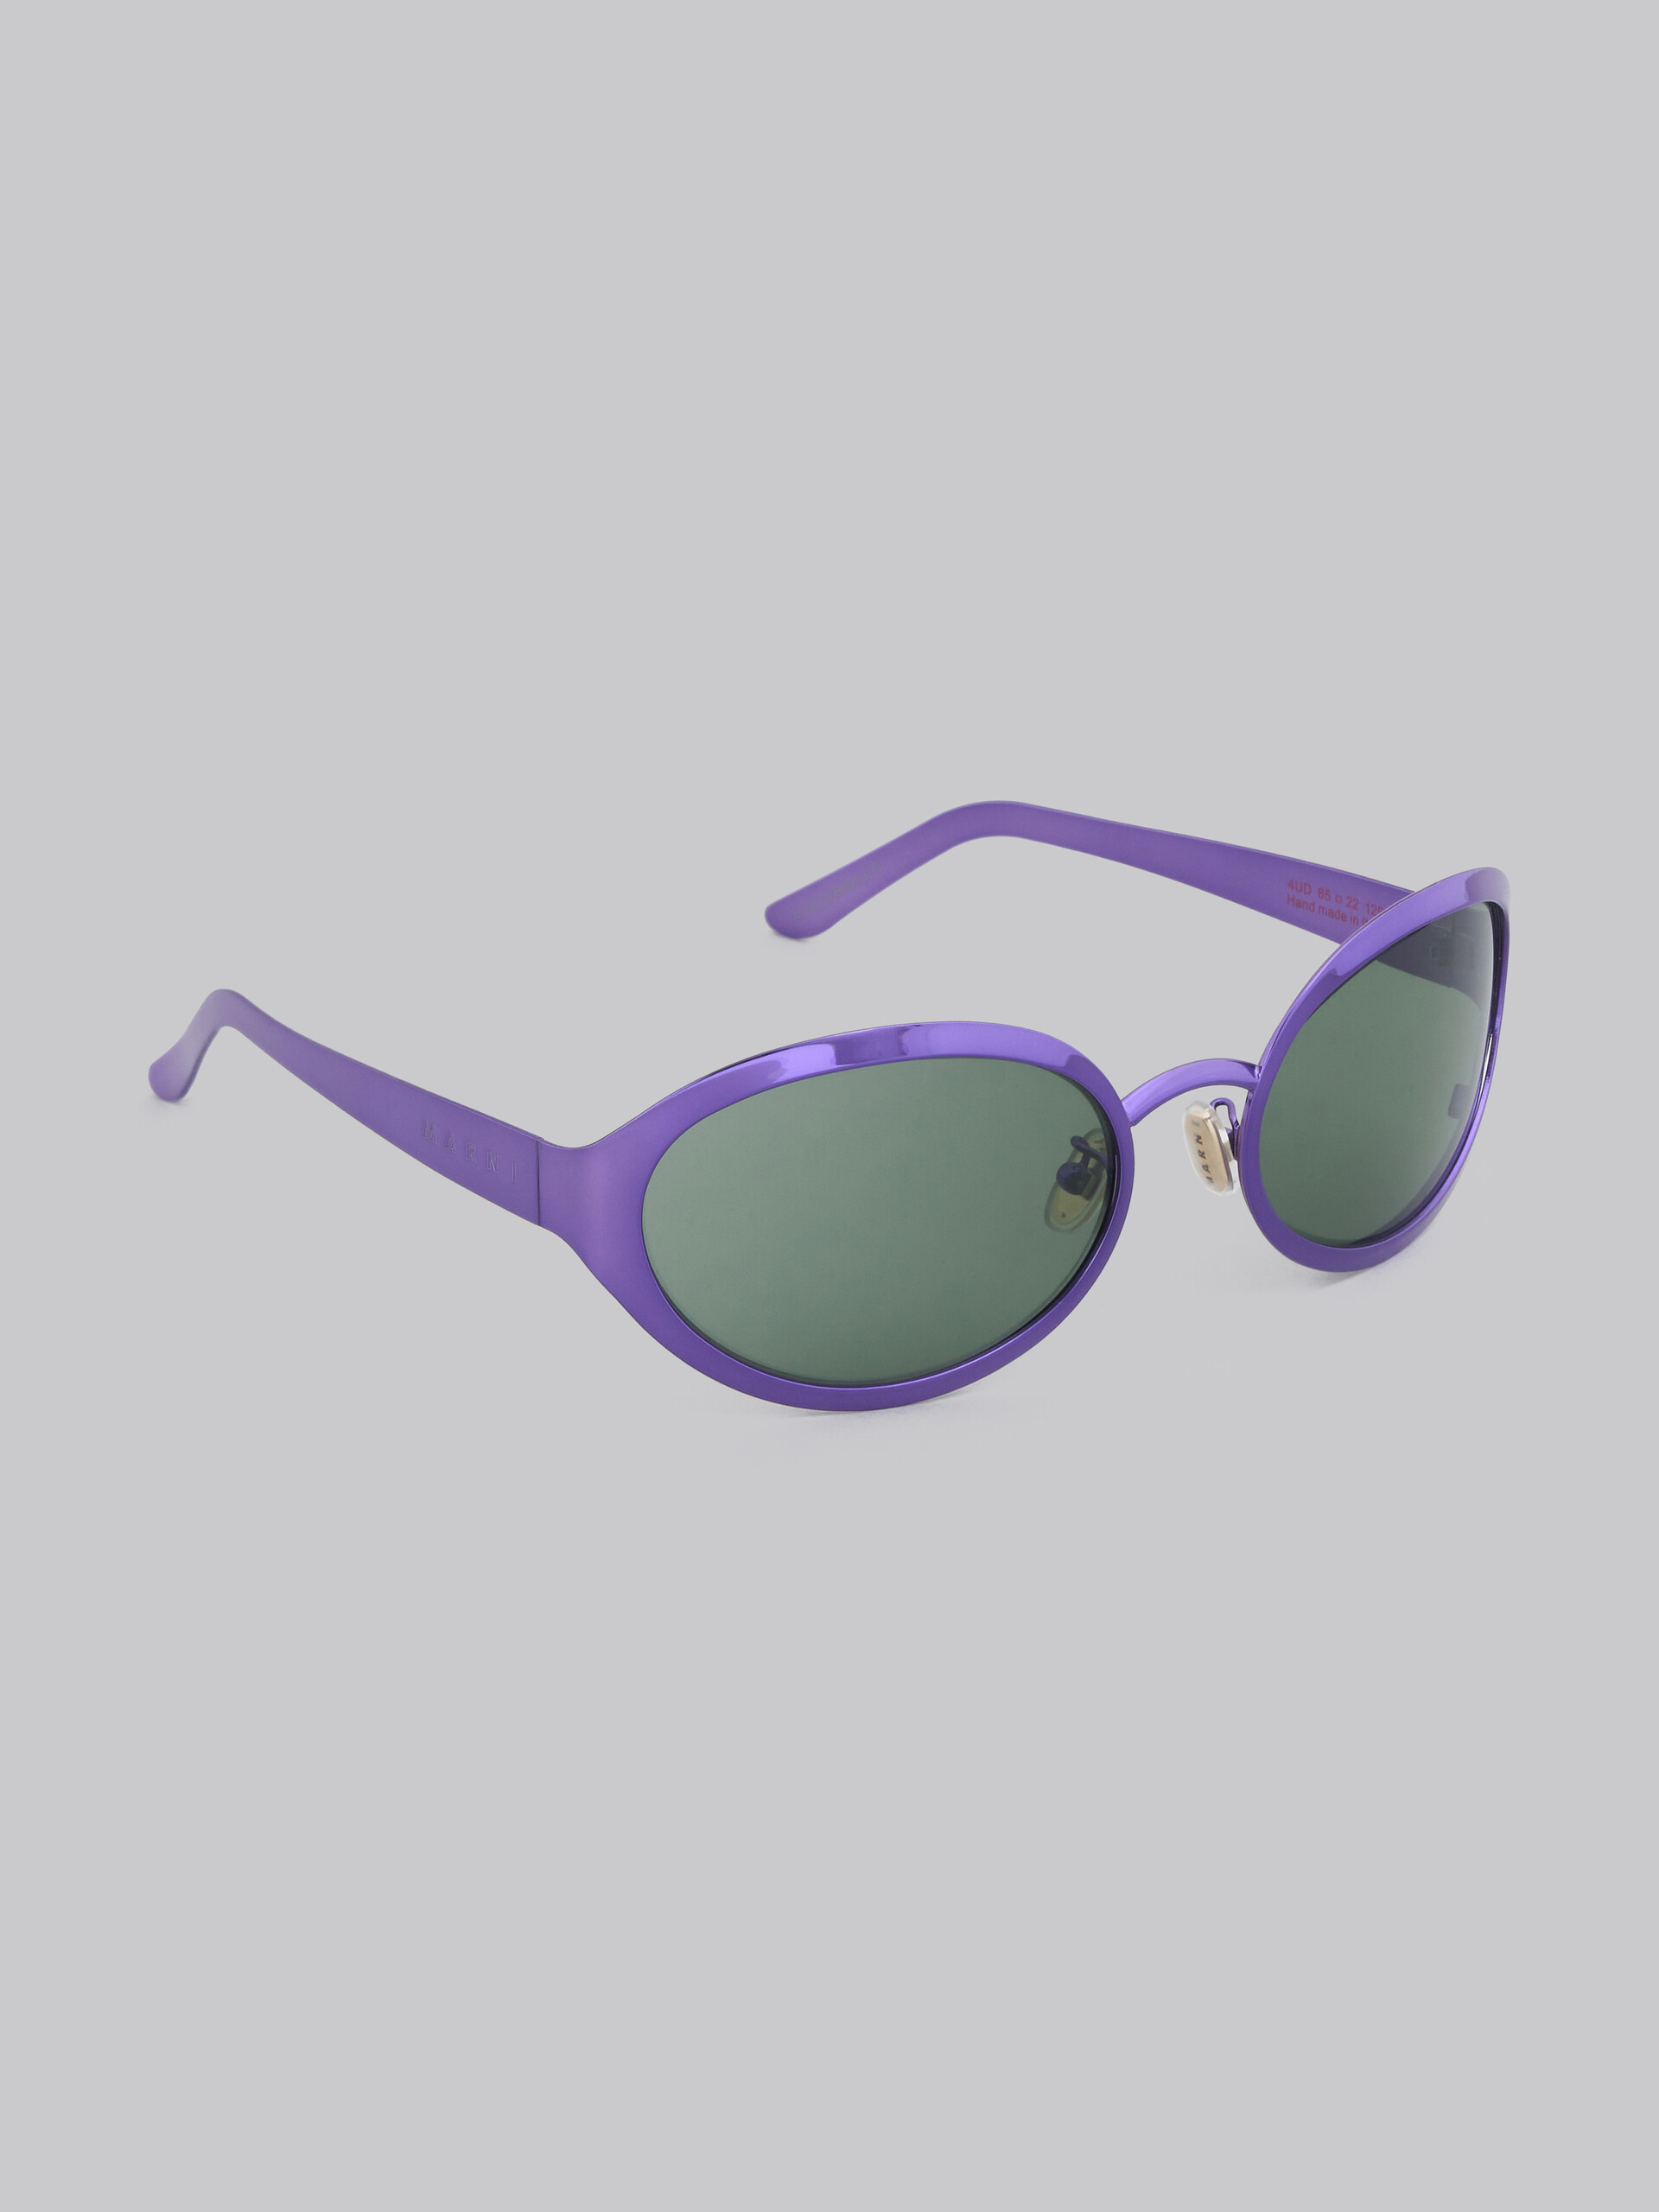 To-Sua green sunglasses - Optical - Image 3